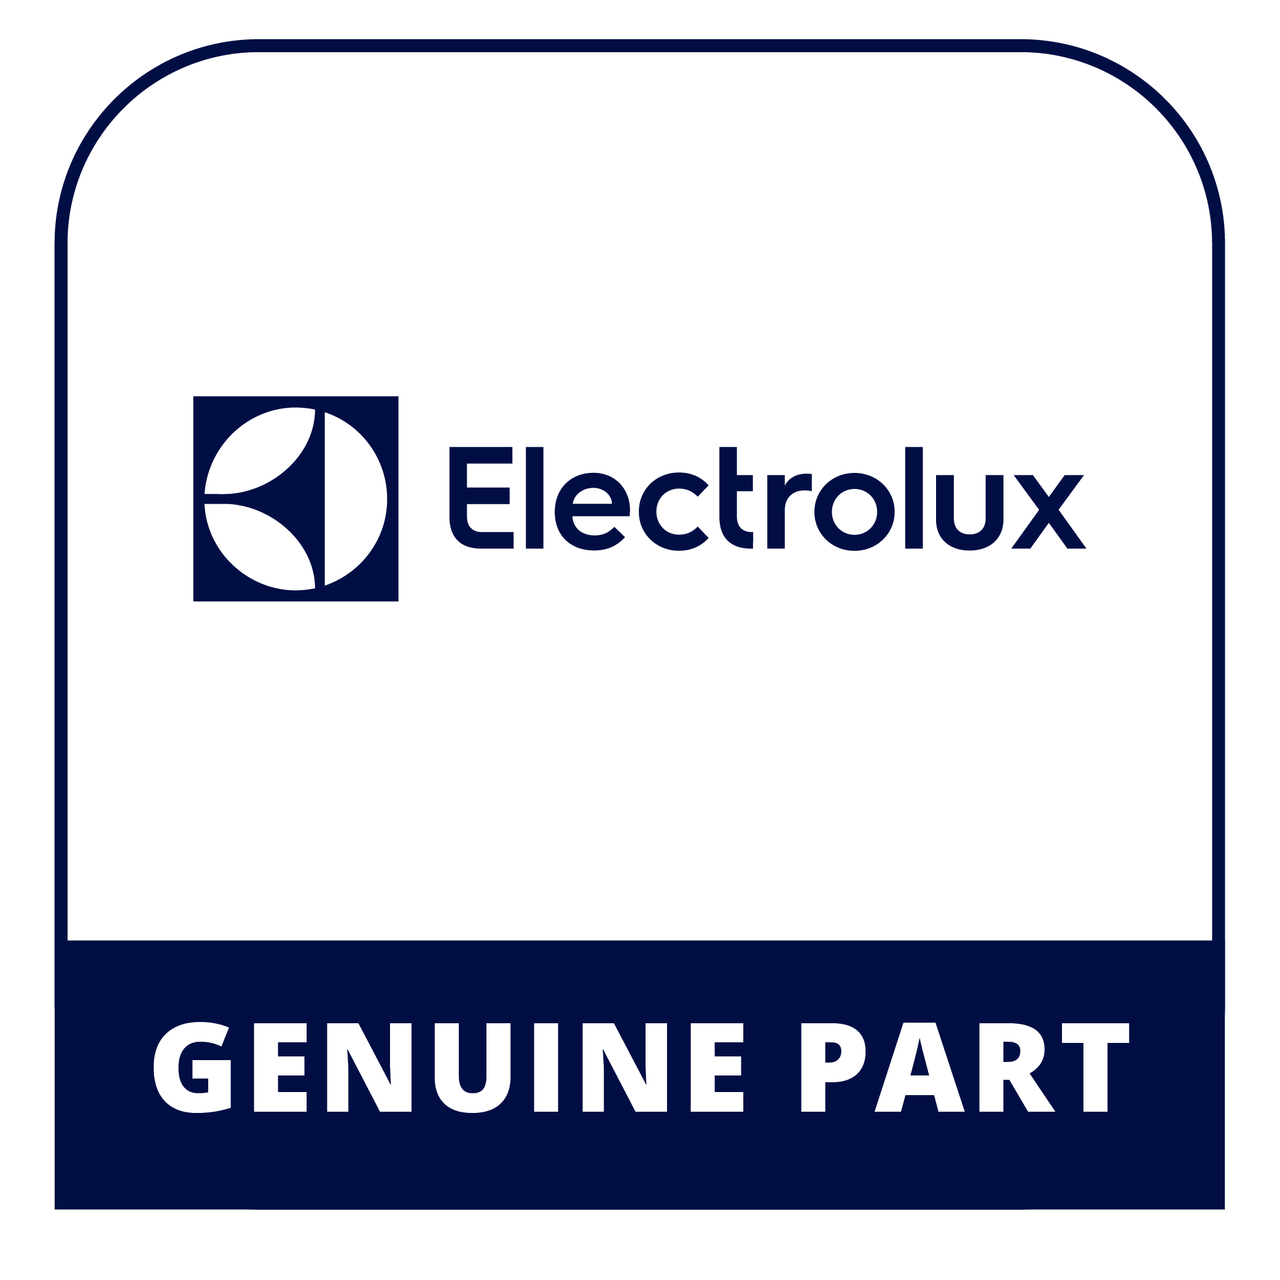 Frigidaire - Electrolux 5304519906 - Motor & Pump Assy - Genuine Electrolux Part